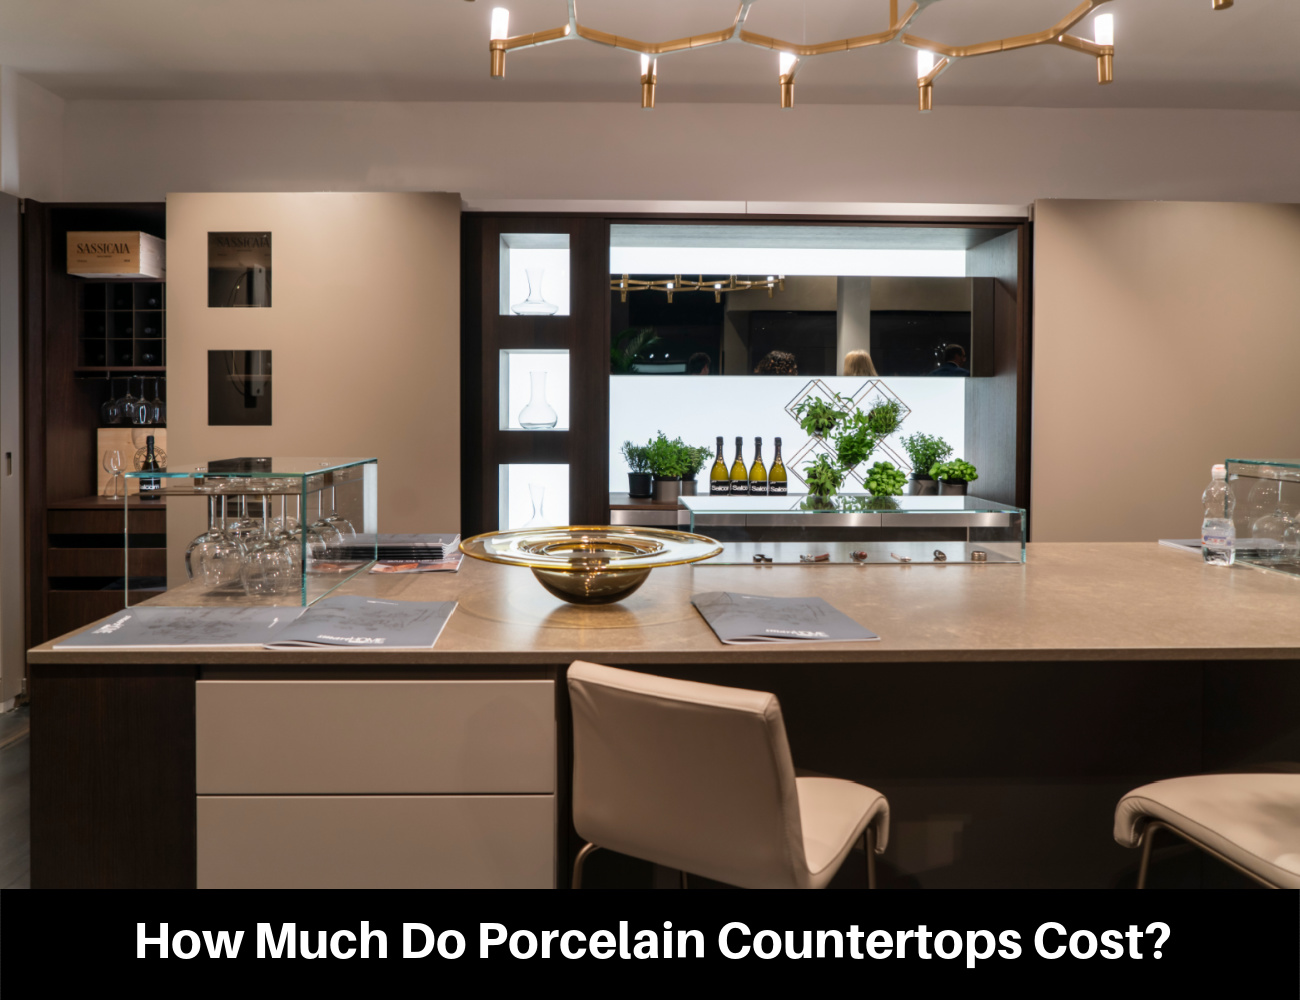 Porcelain Countertops Cost